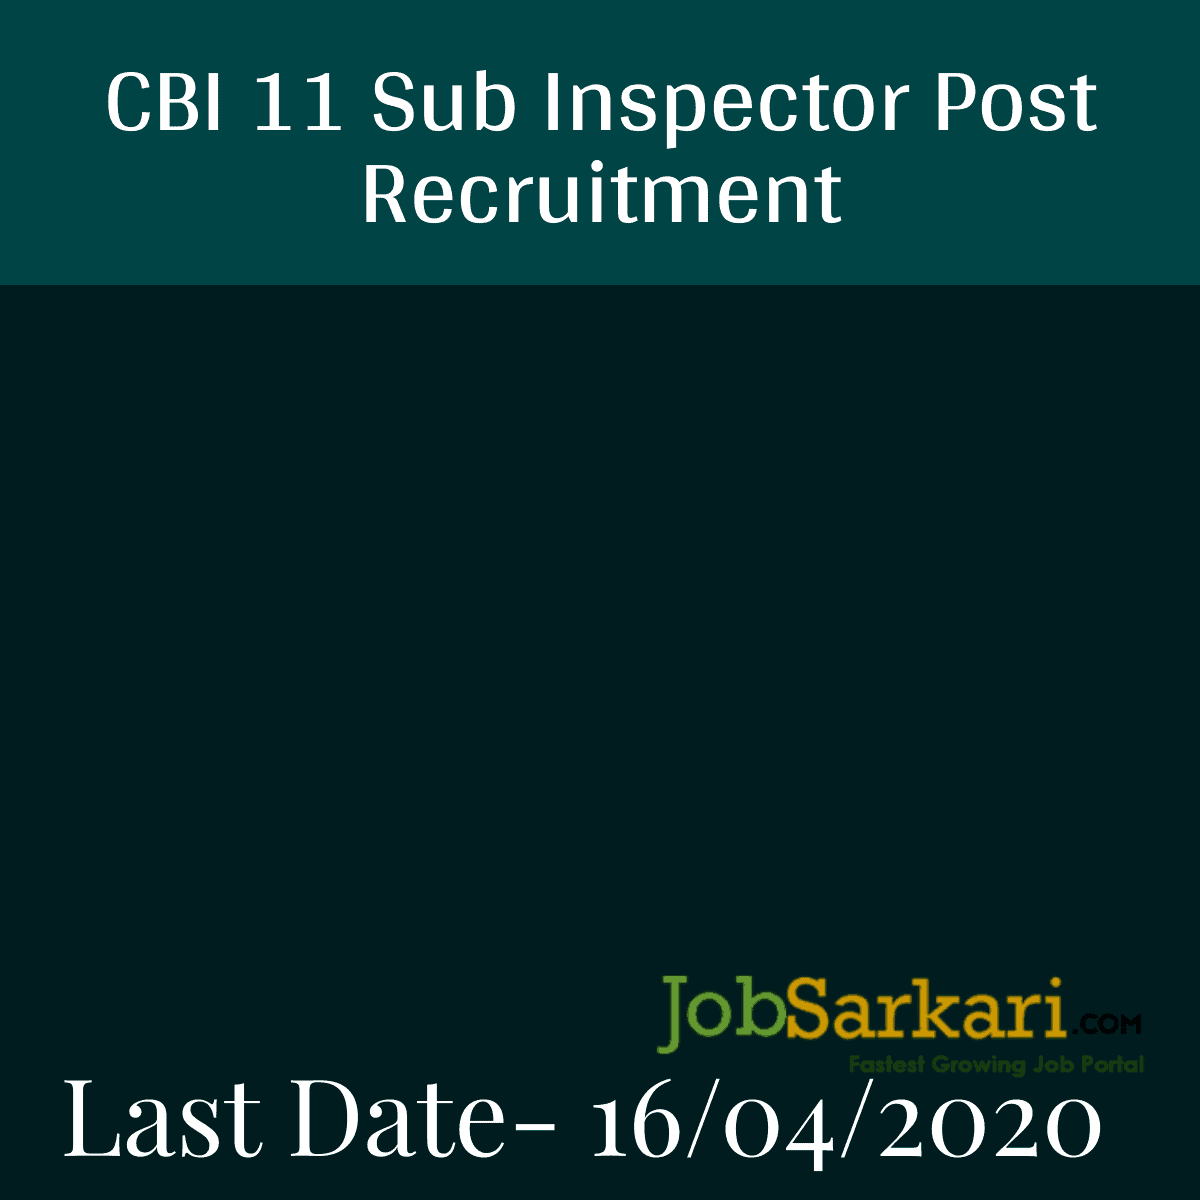 CBI Recruitment 2020 For Sub Inspector Post 40